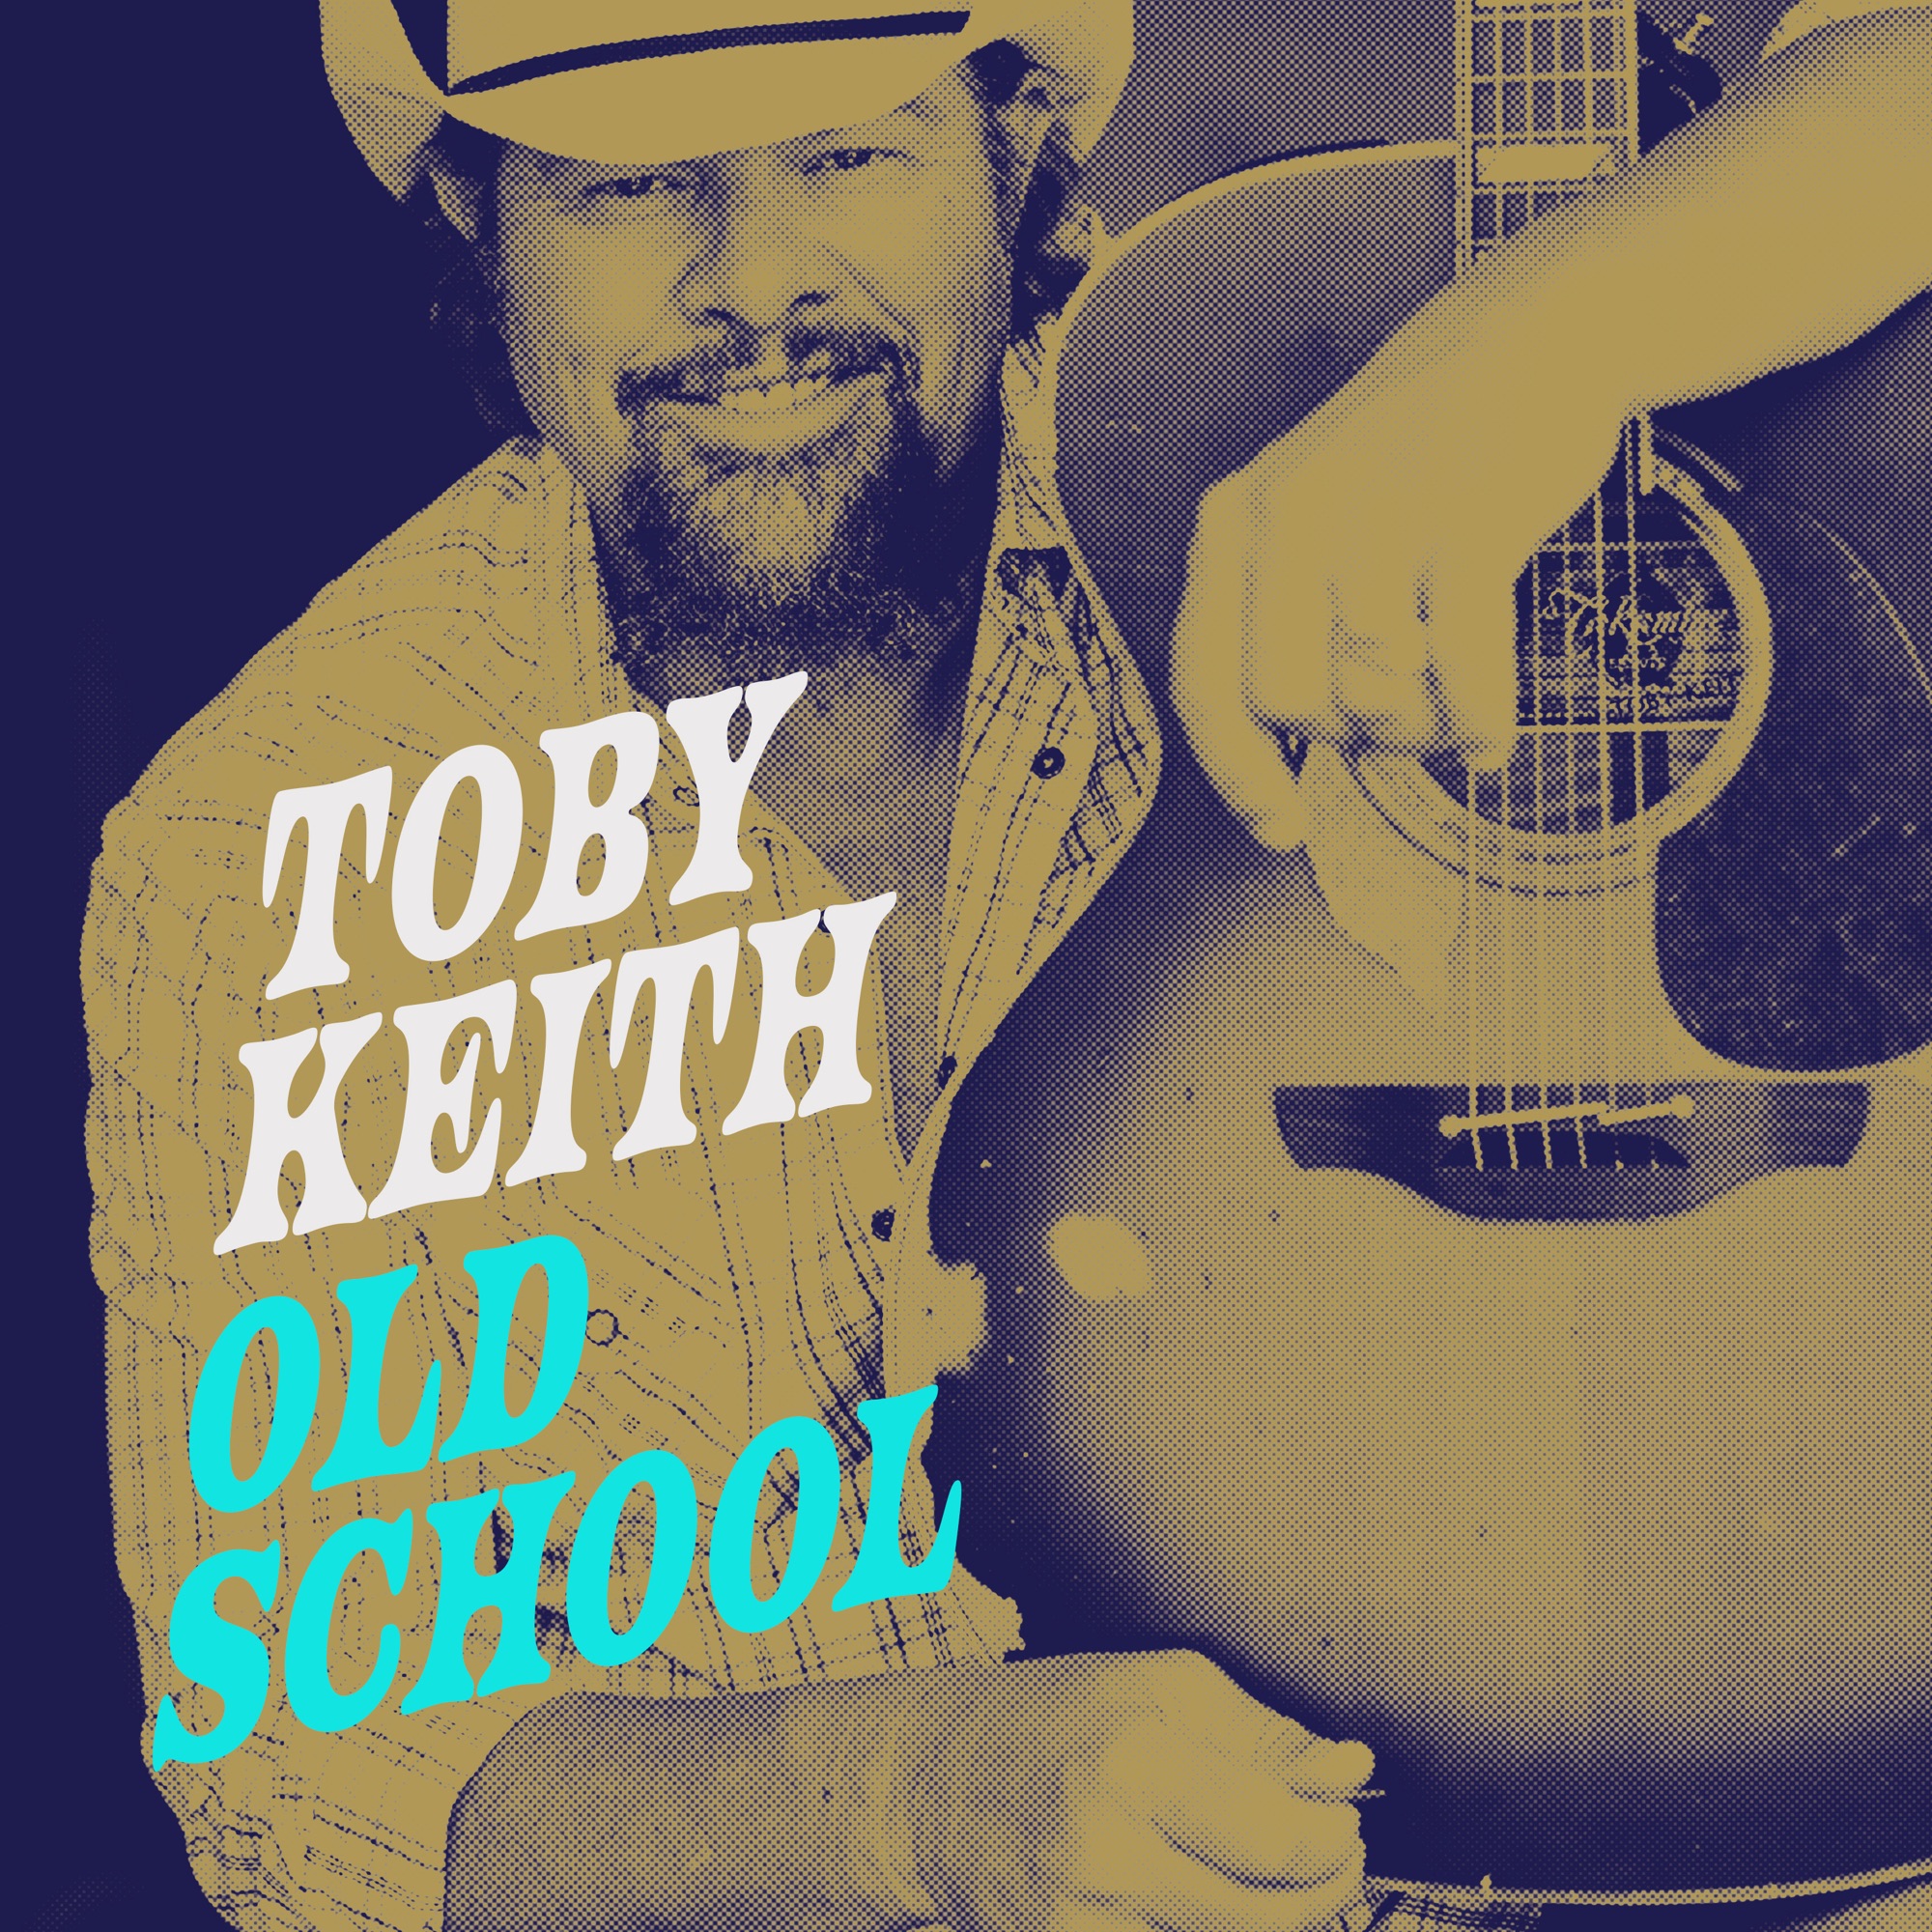 Toby Keith - Old School - Single